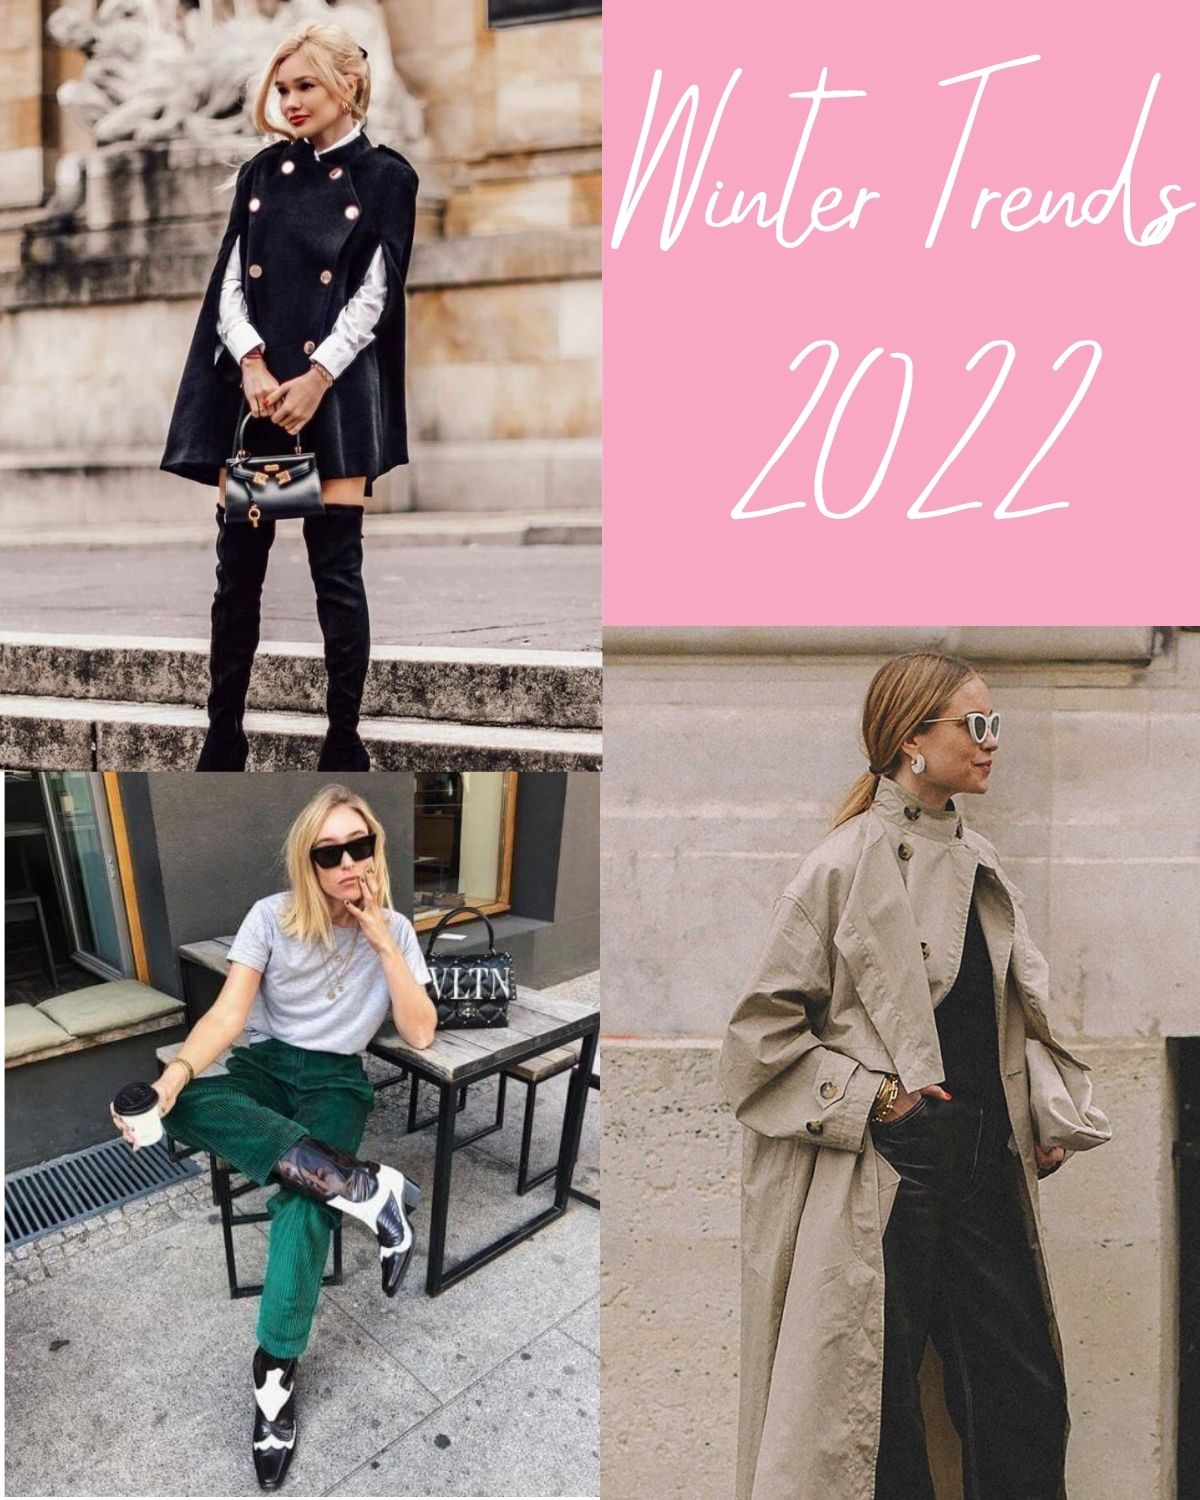 Three girls in winter 2022 trends